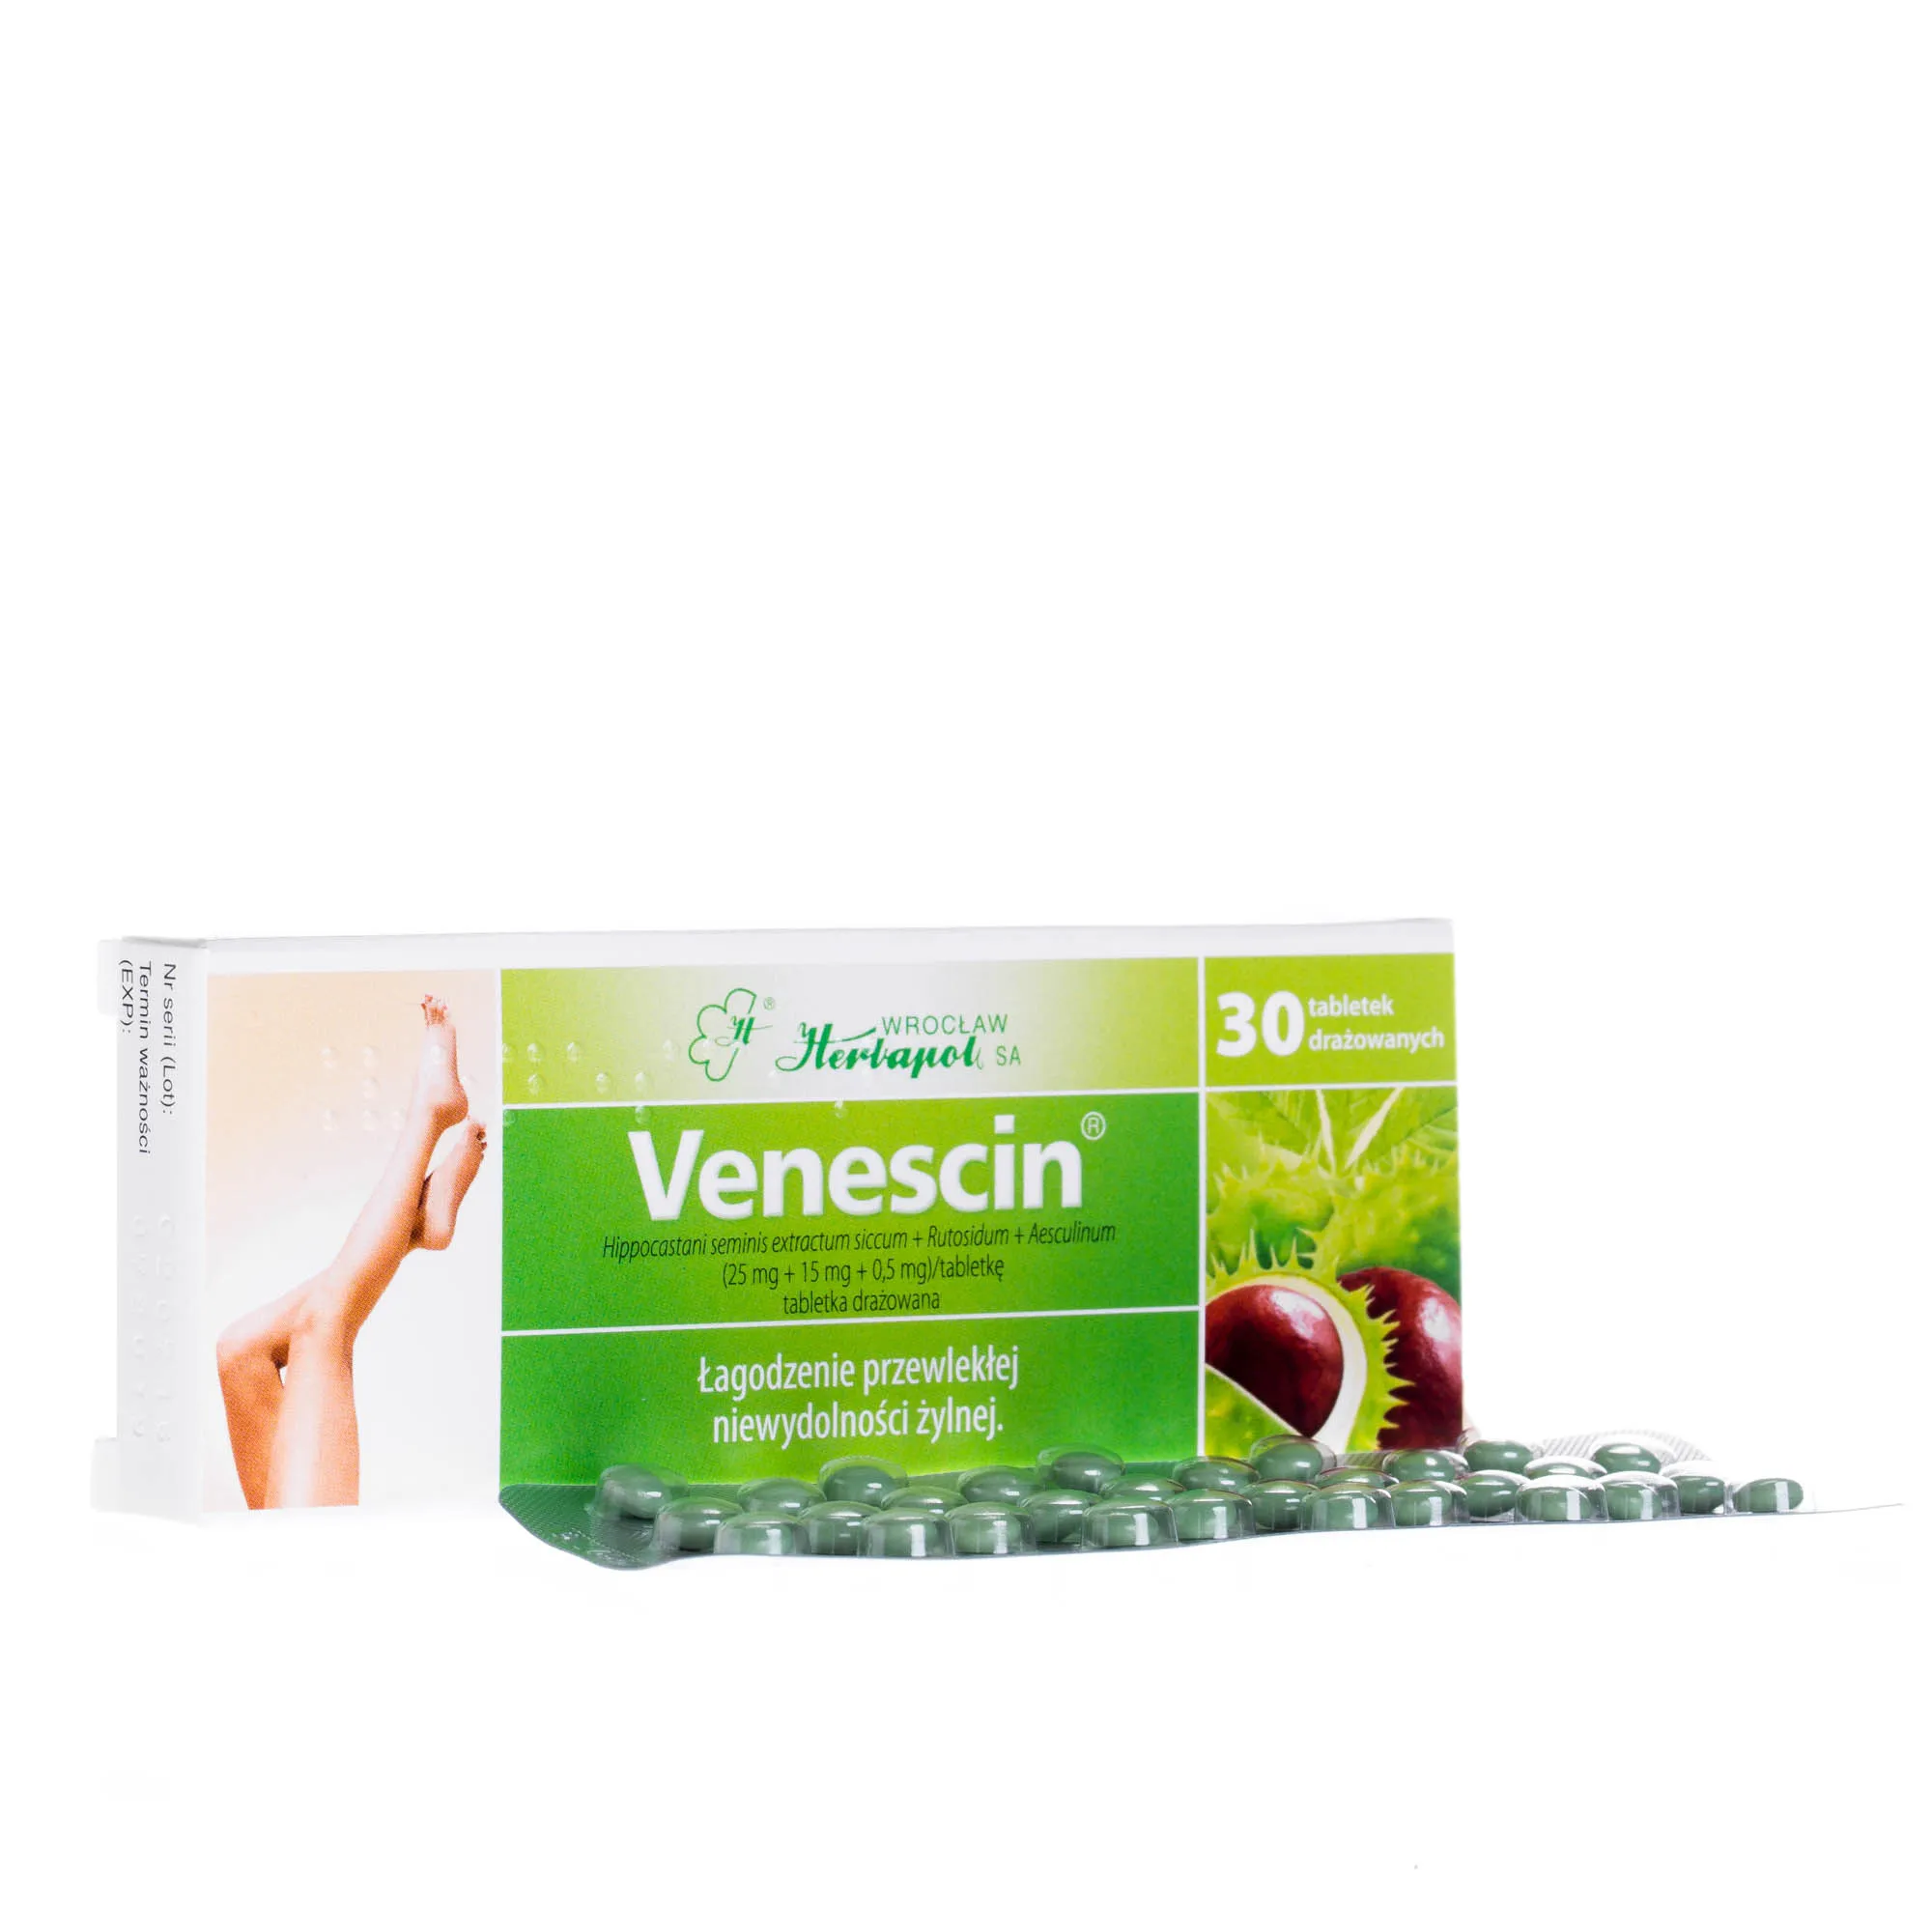 Venescin, 30 tabletek drażowanych